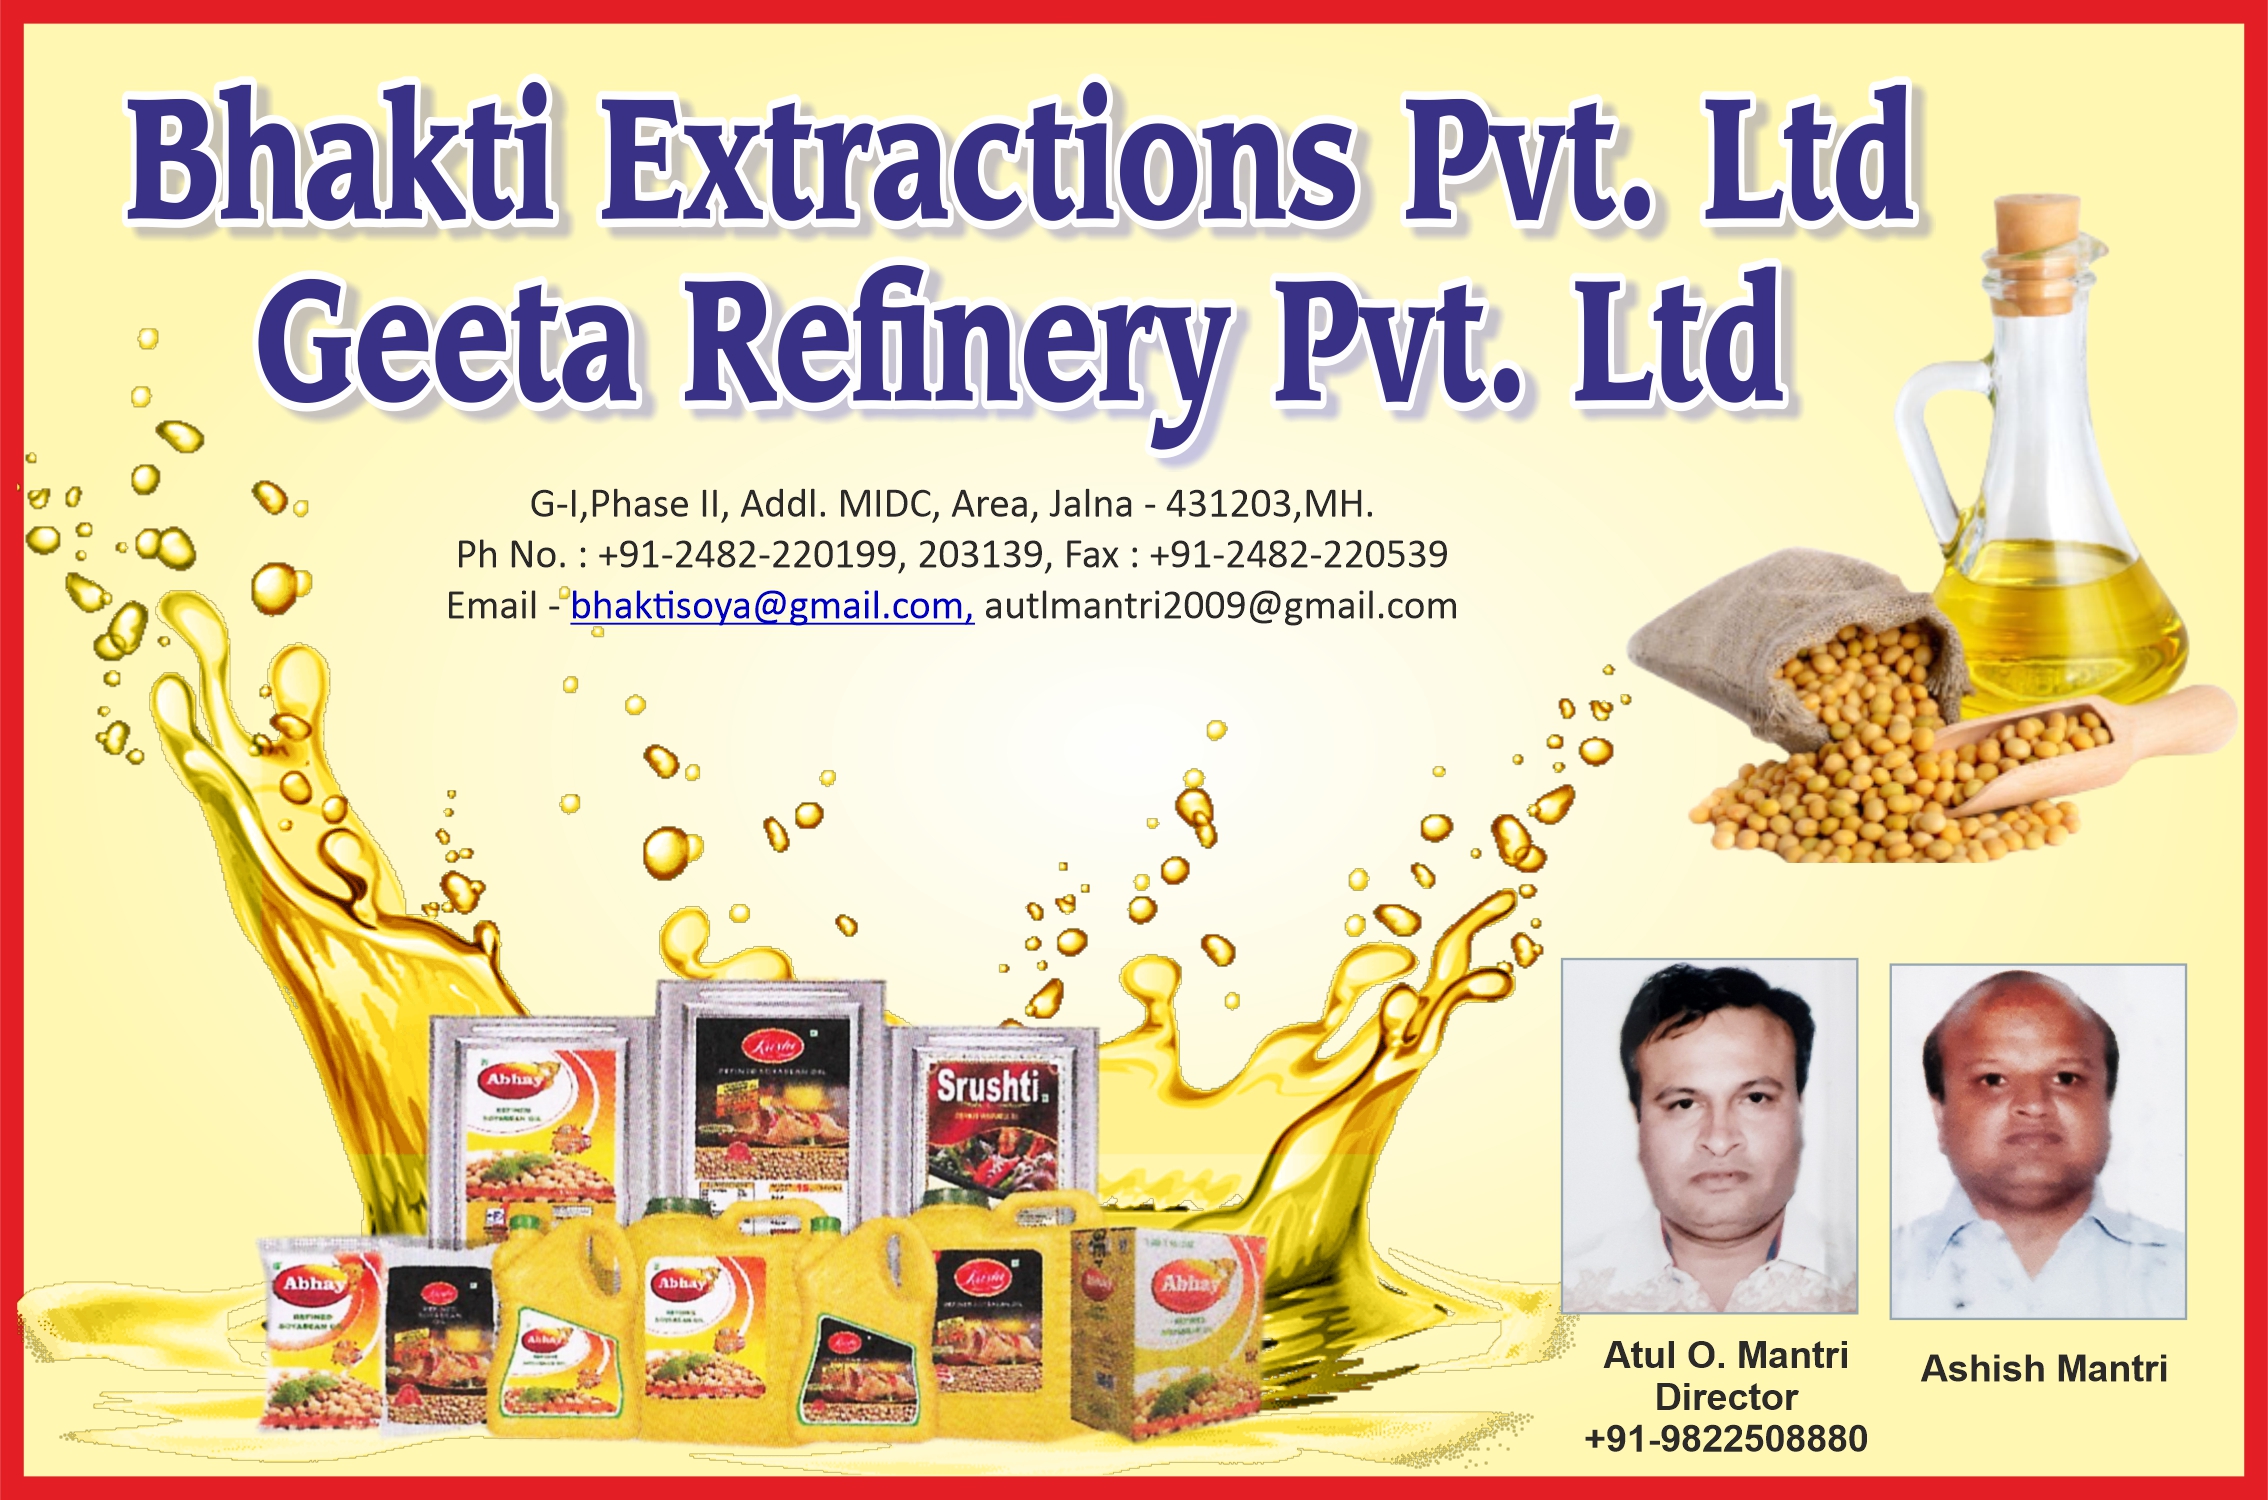 Geeta Refinery Pvt. Ltd.